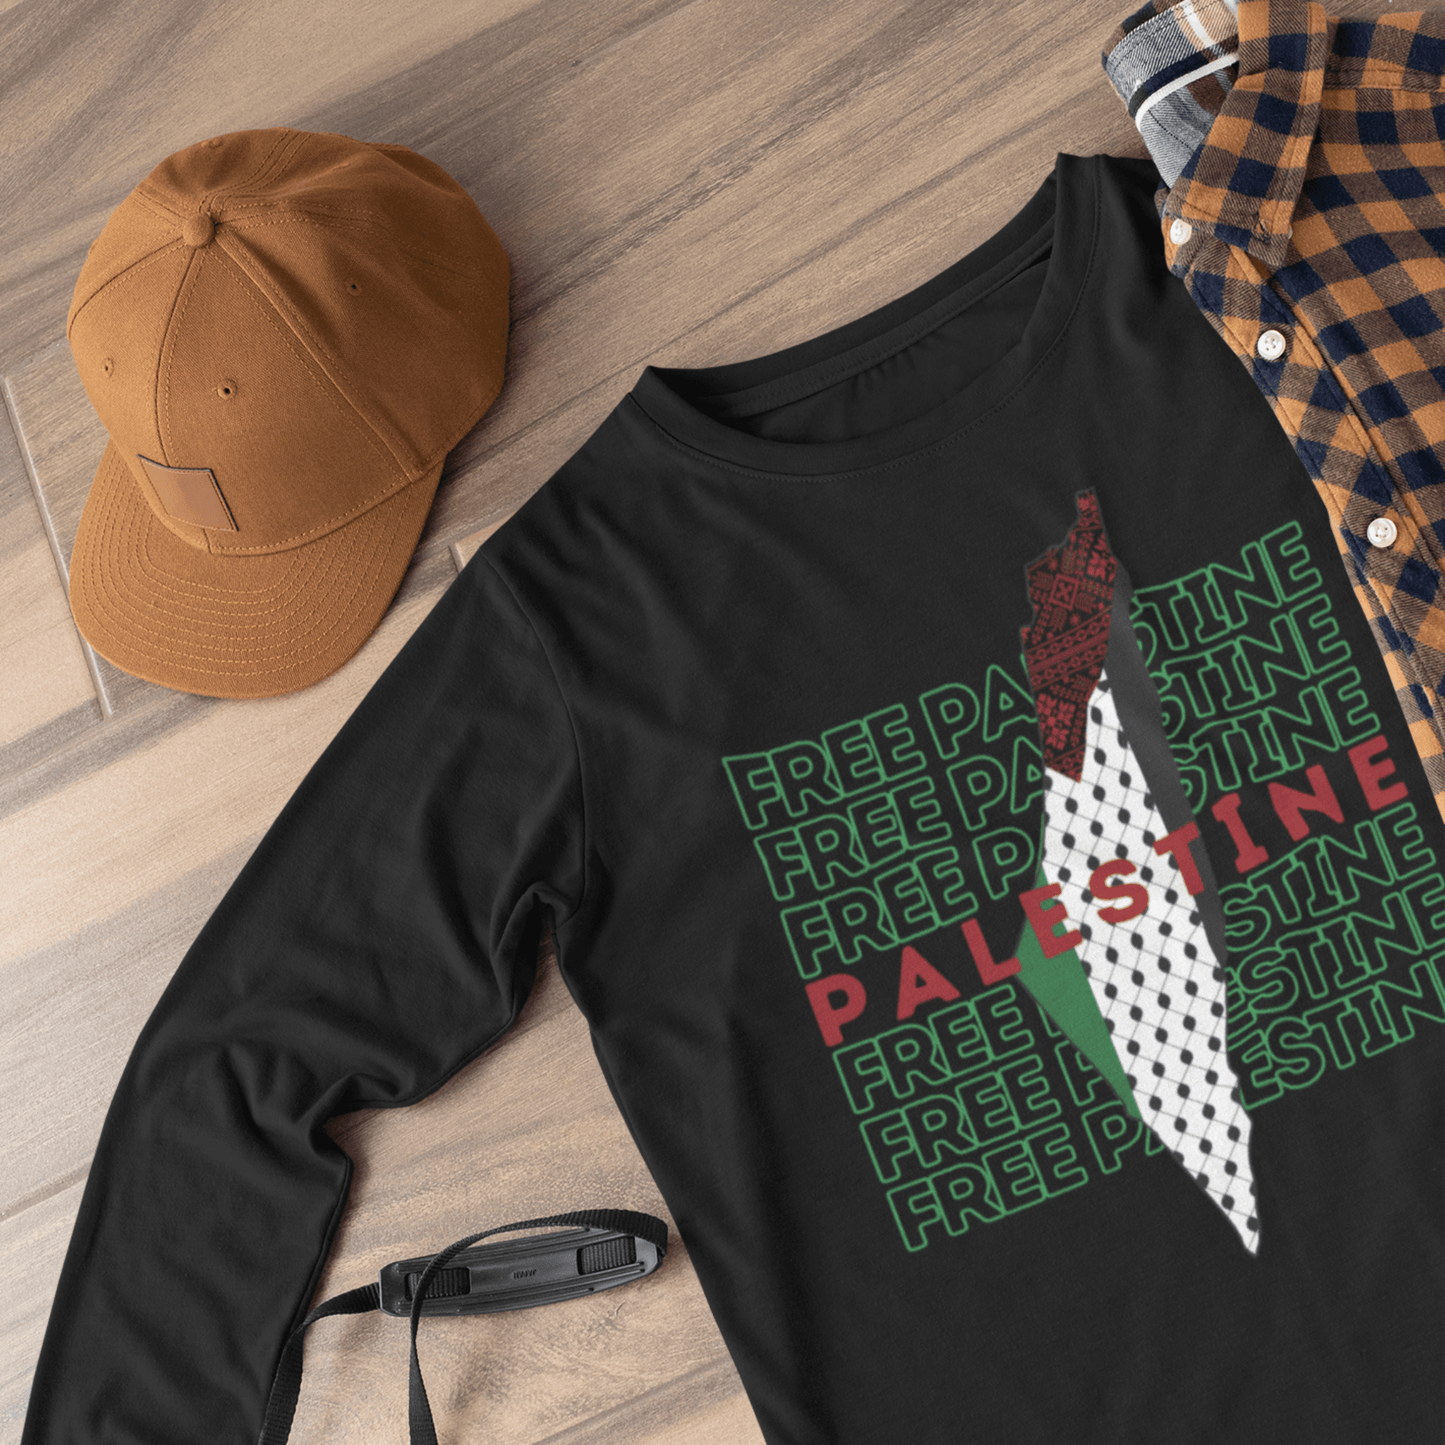 Free Palestine Green Map Long Sleeve Tshirt